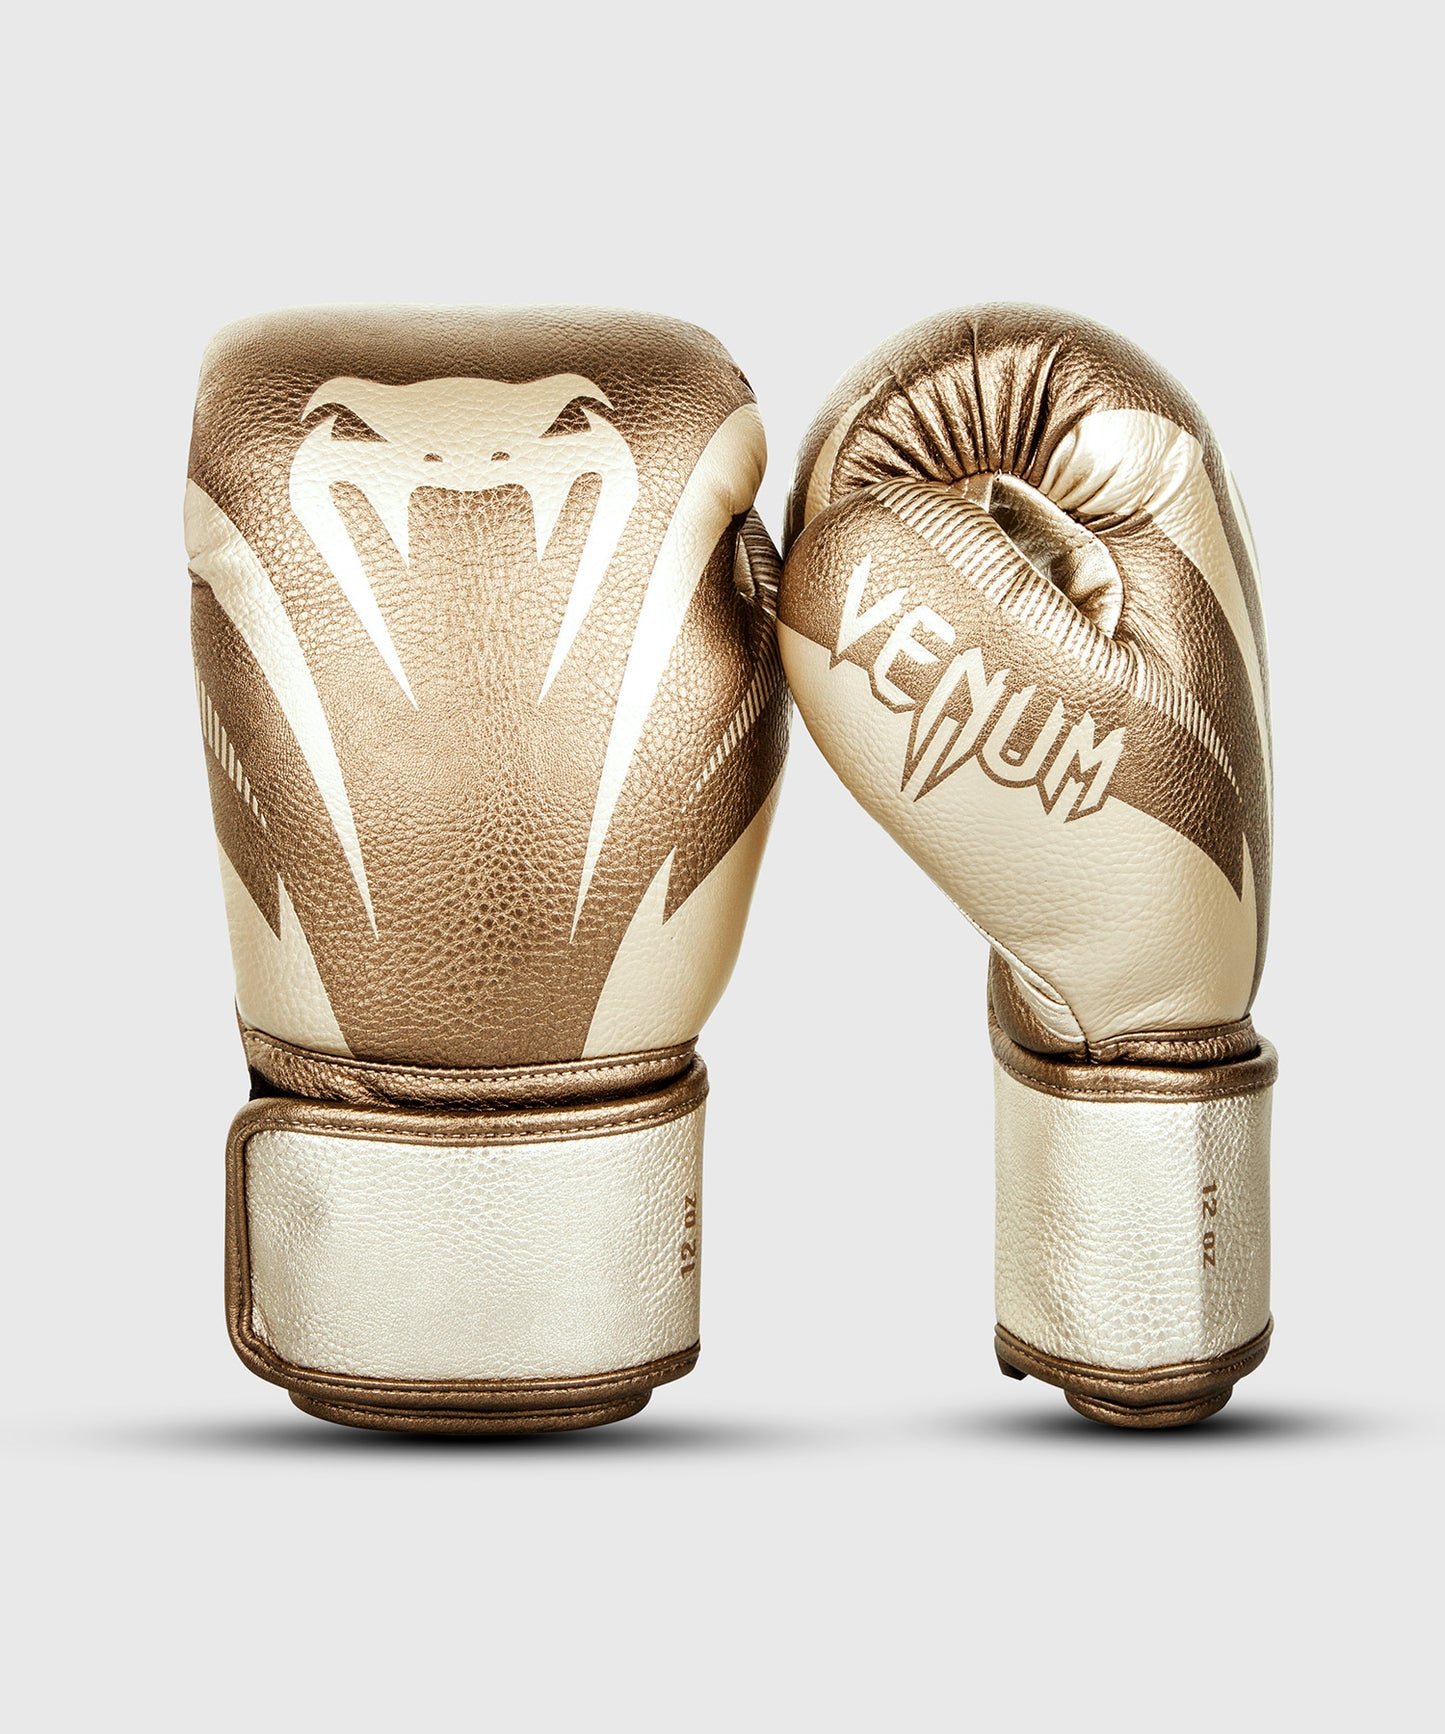 Venum Impact Boxhandschuhe - Gold/Gold